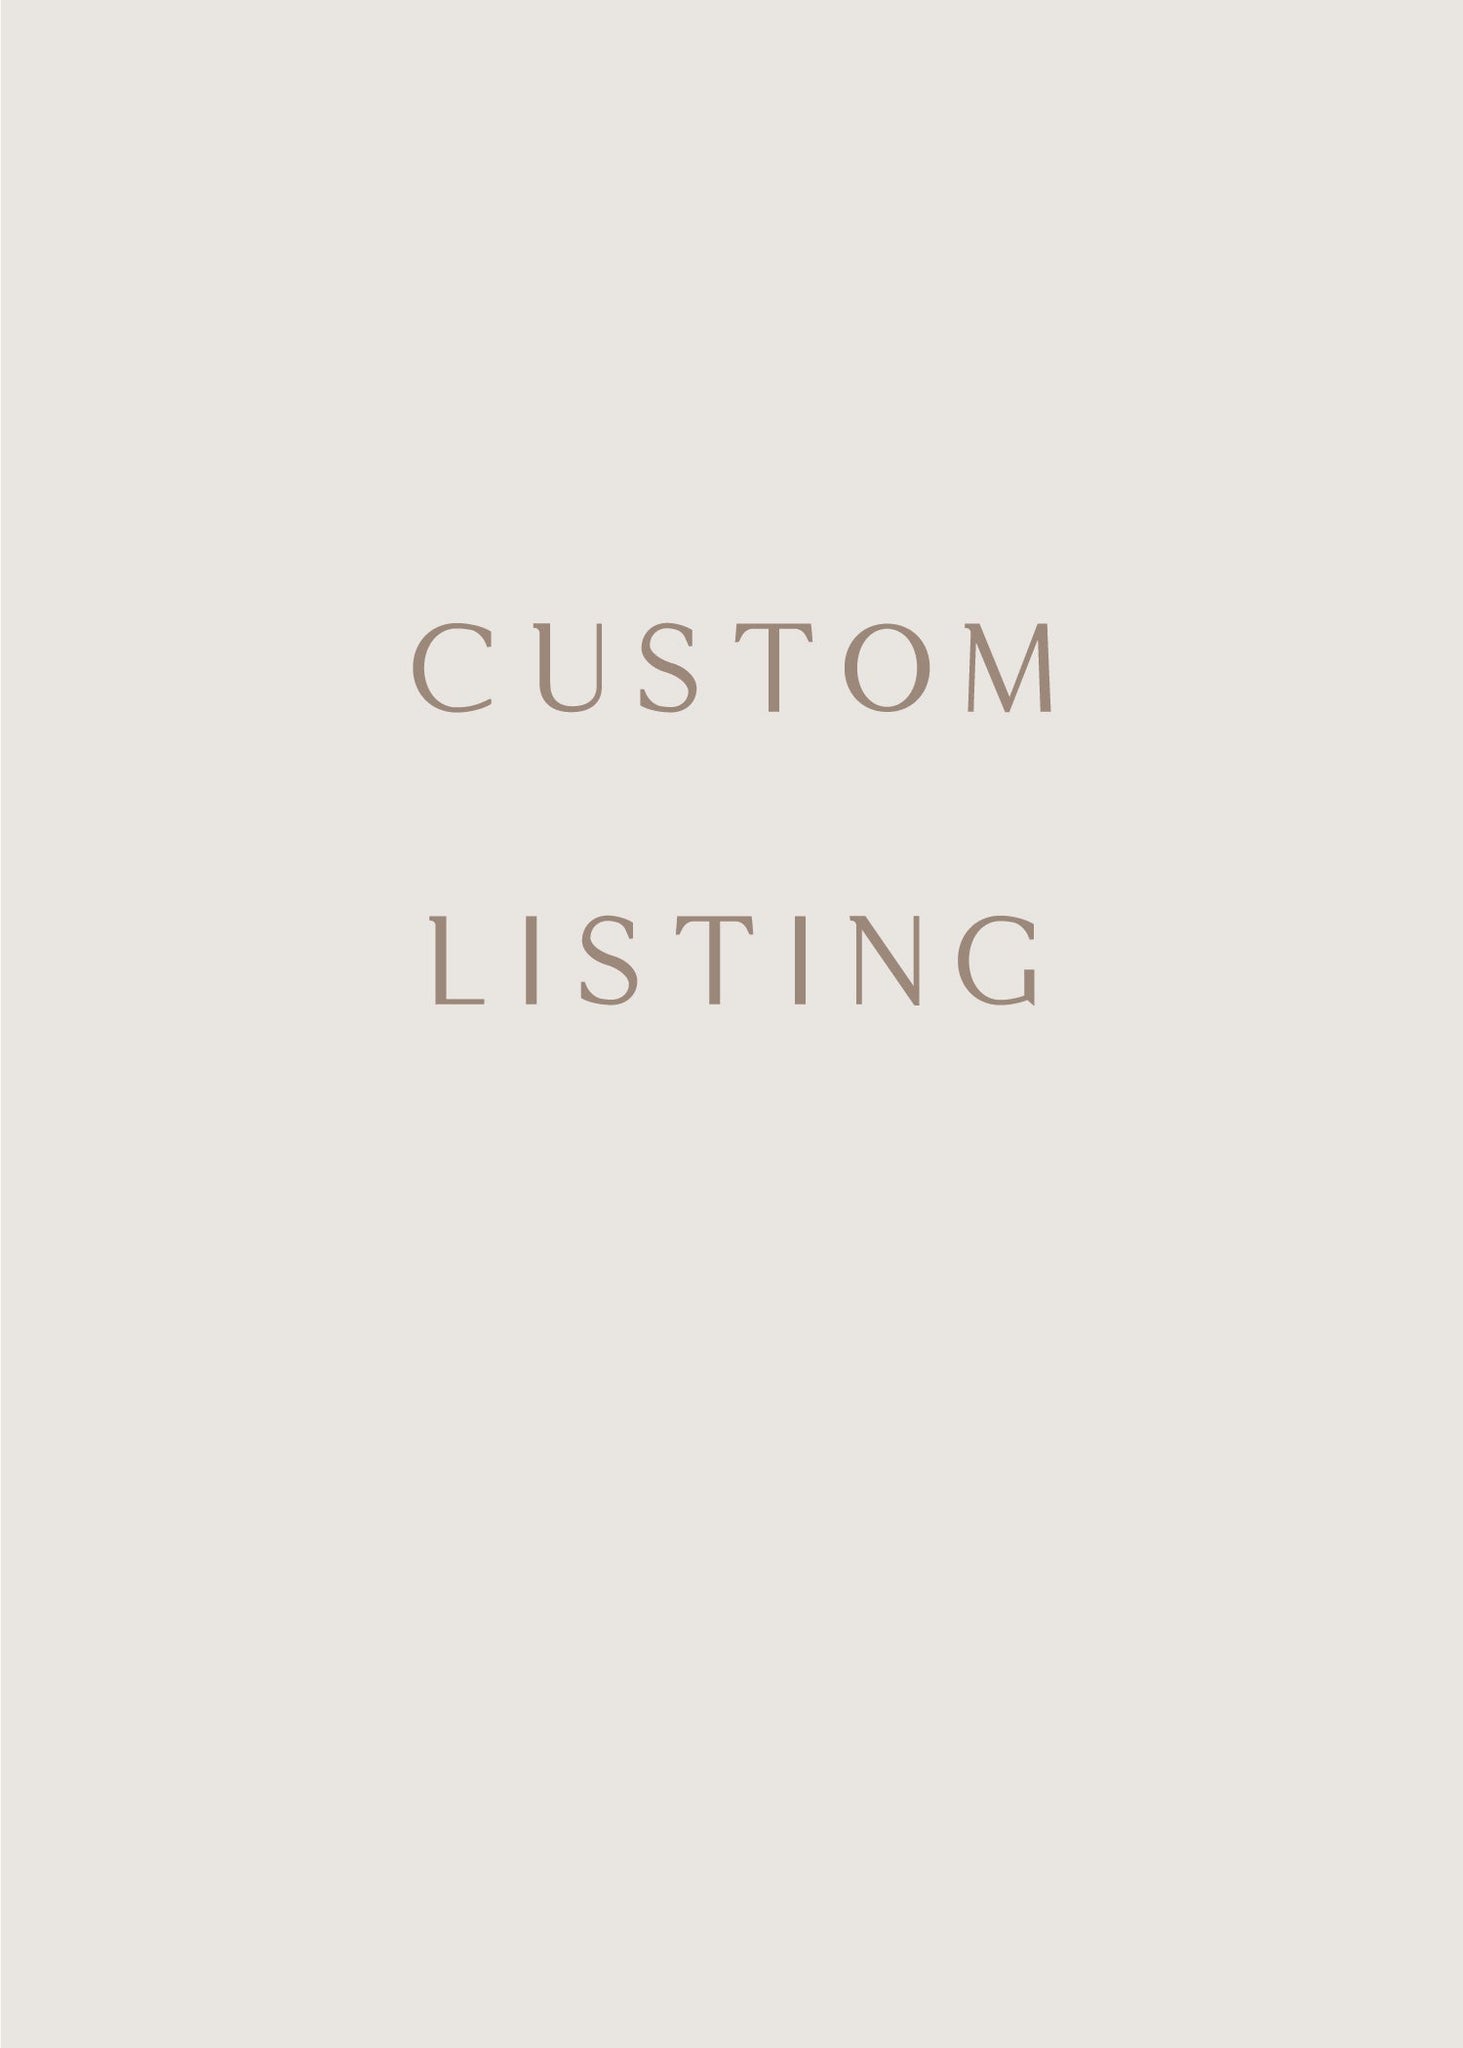 Custom listing_DHL shipping upgrade (UK)